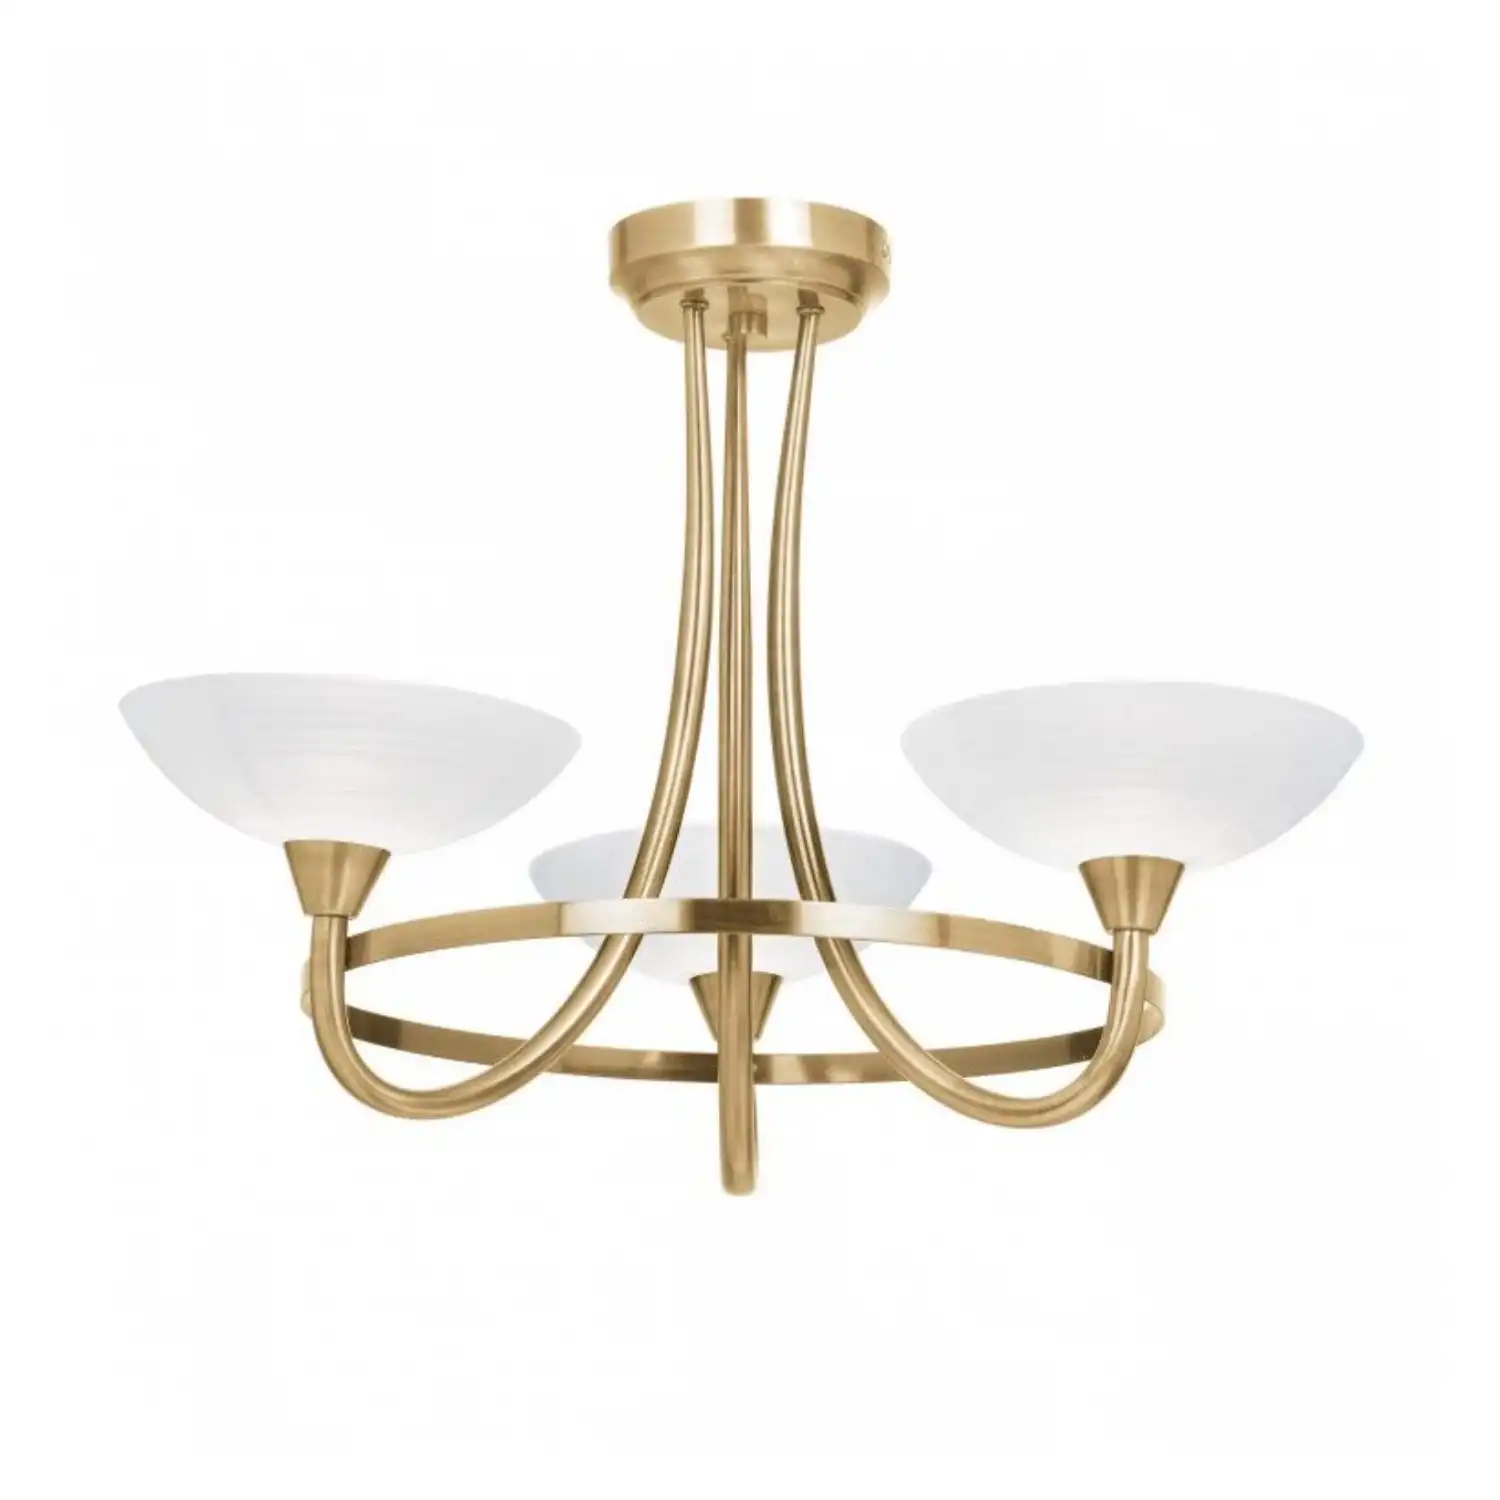 3 Ceiling Lamp Antique Brass